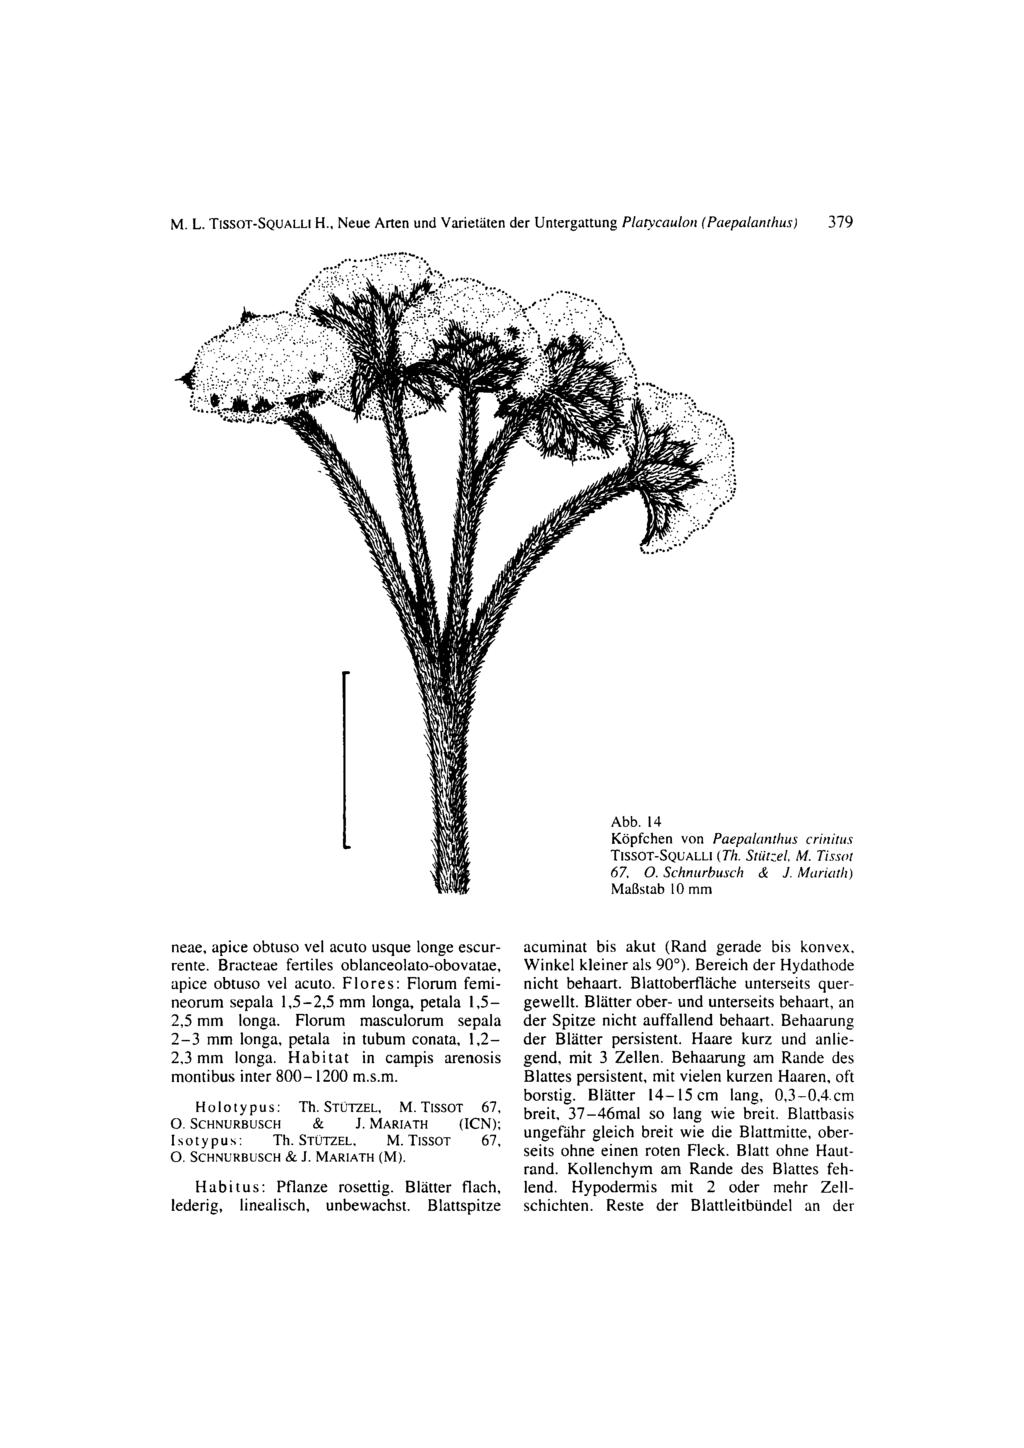 M. L. TISSOT-SQUALLI H.. Neue Arten und Varietlten der Untergattung Plarycaulori (Paepalanrhus) 379 Abb. 14 Kopfchen von Paepnlnnrhu s crinitiis TISSOT-SQUALLI (Th. Sriirzel, M. Tissor 67. 0.